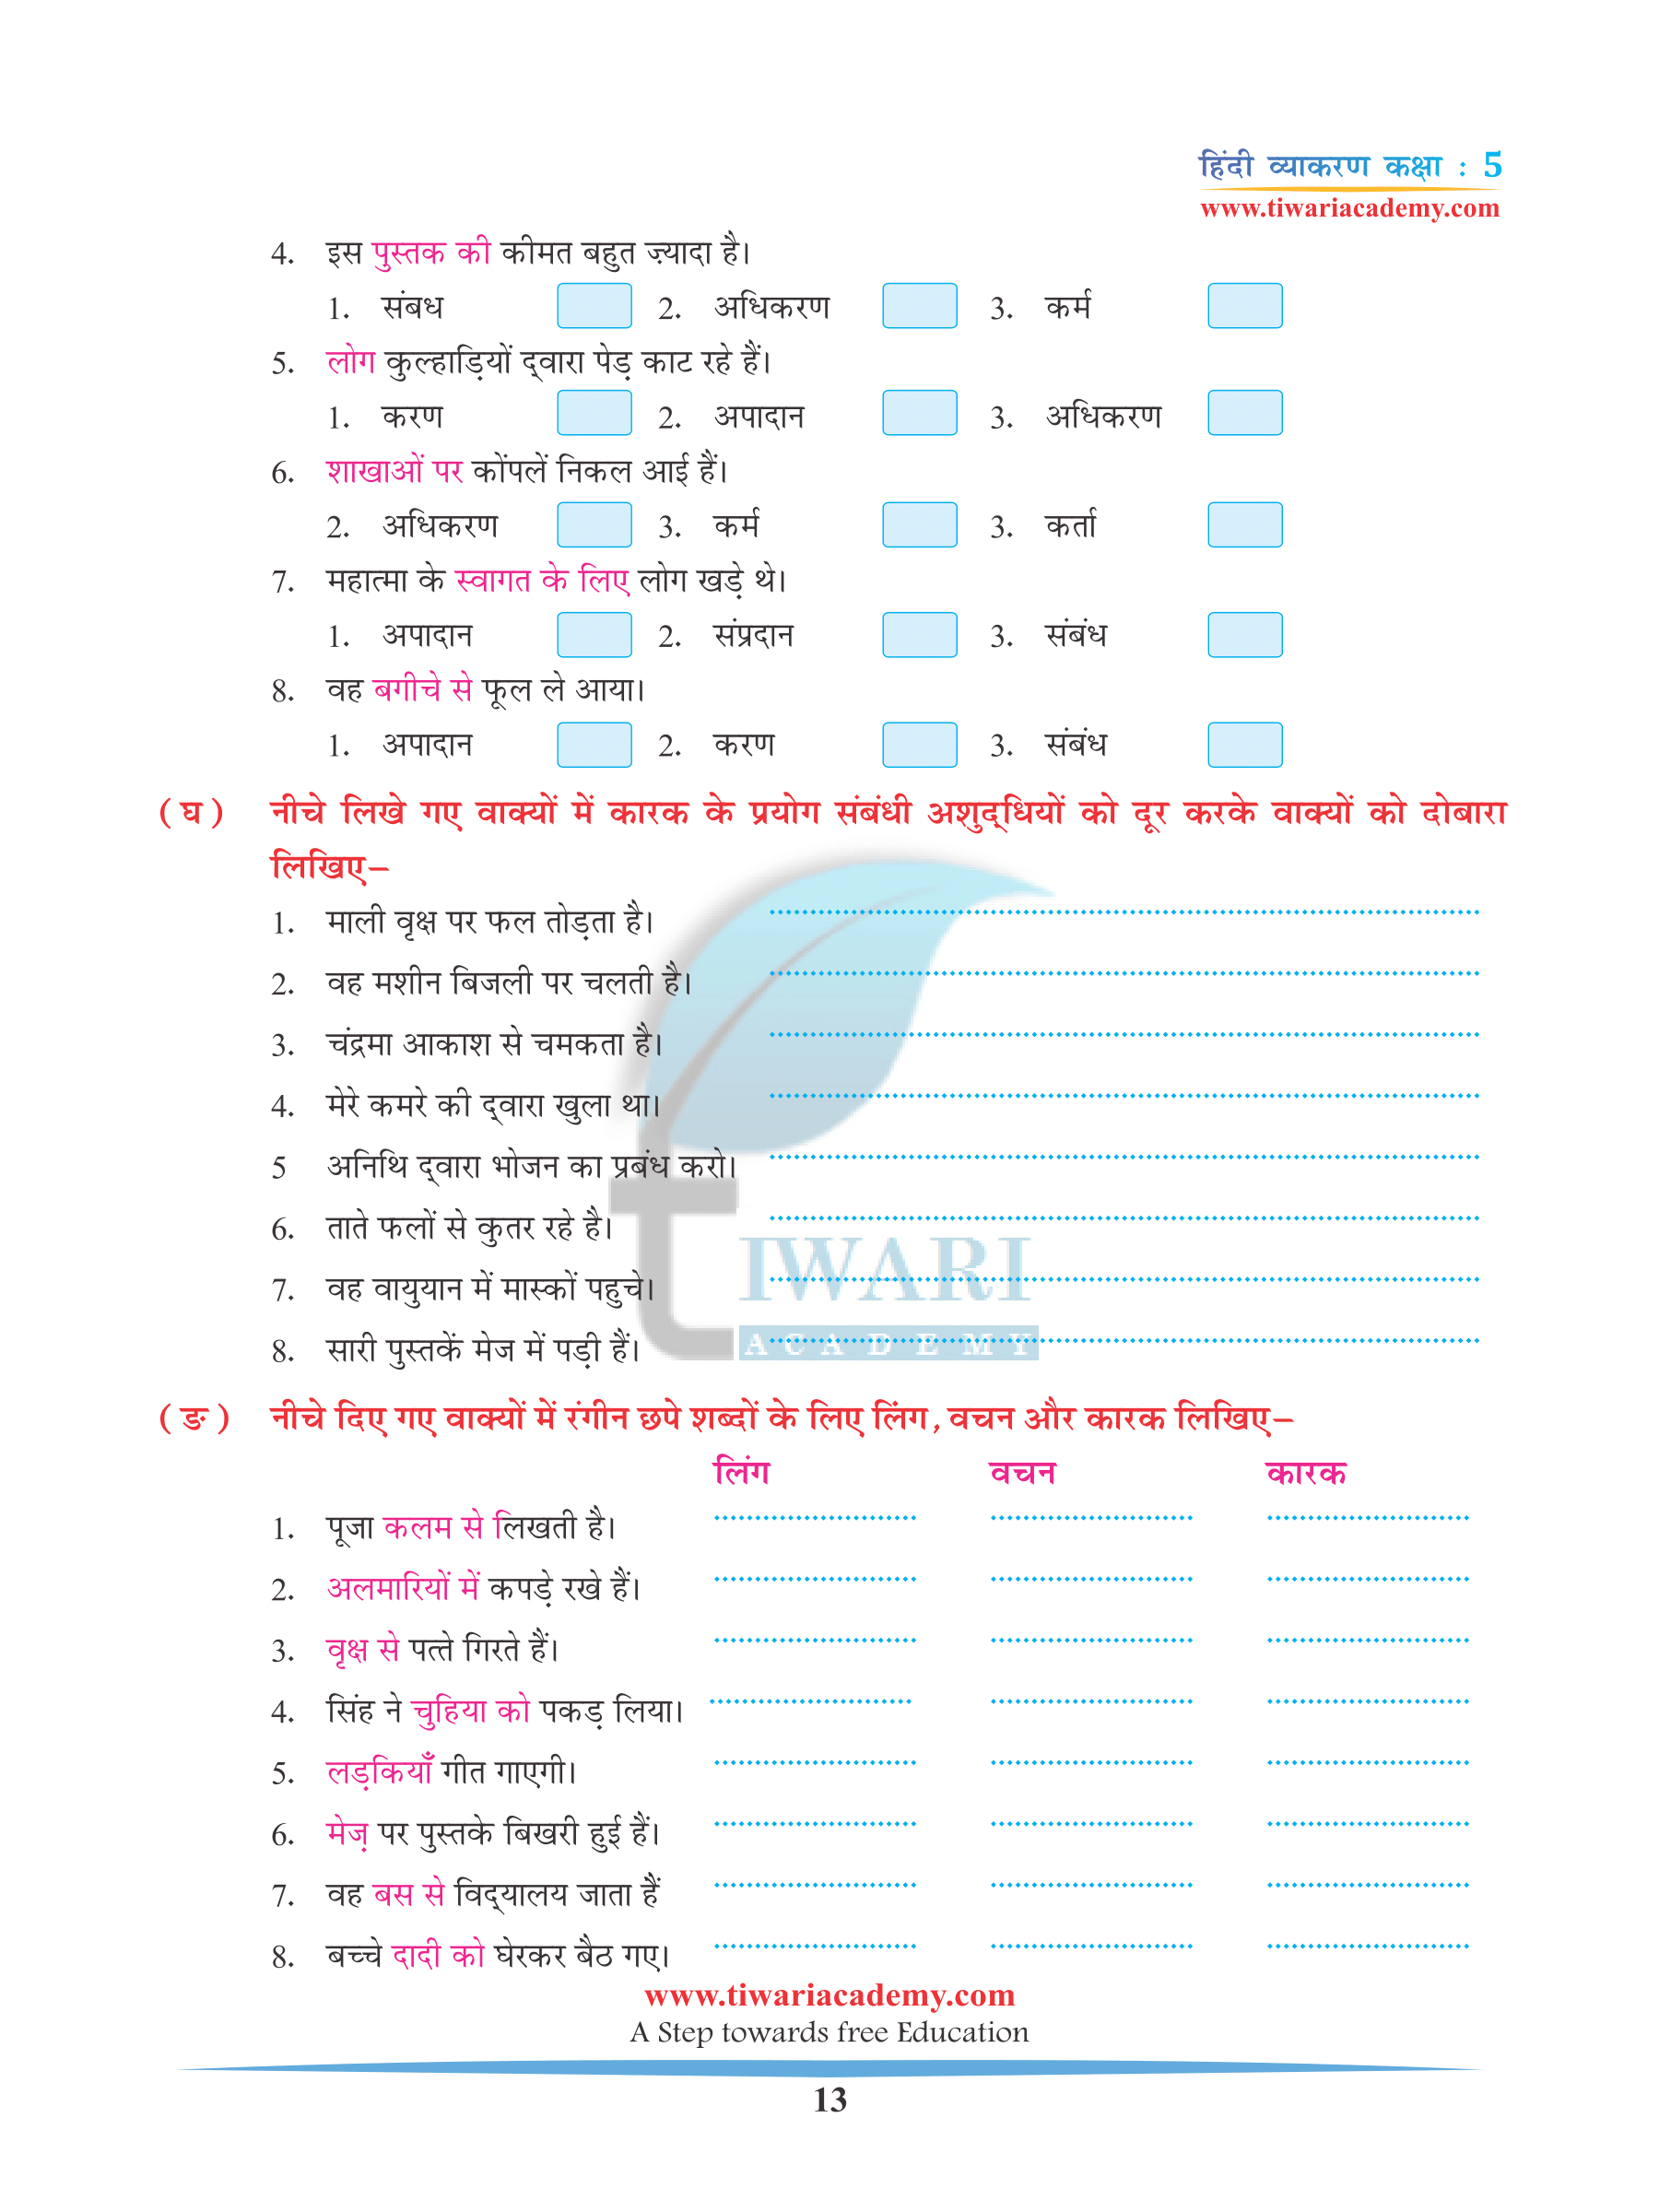 Class 5 Hindi Grammar Chapter 4 Ling, Vachan aur Kaarak free PDF